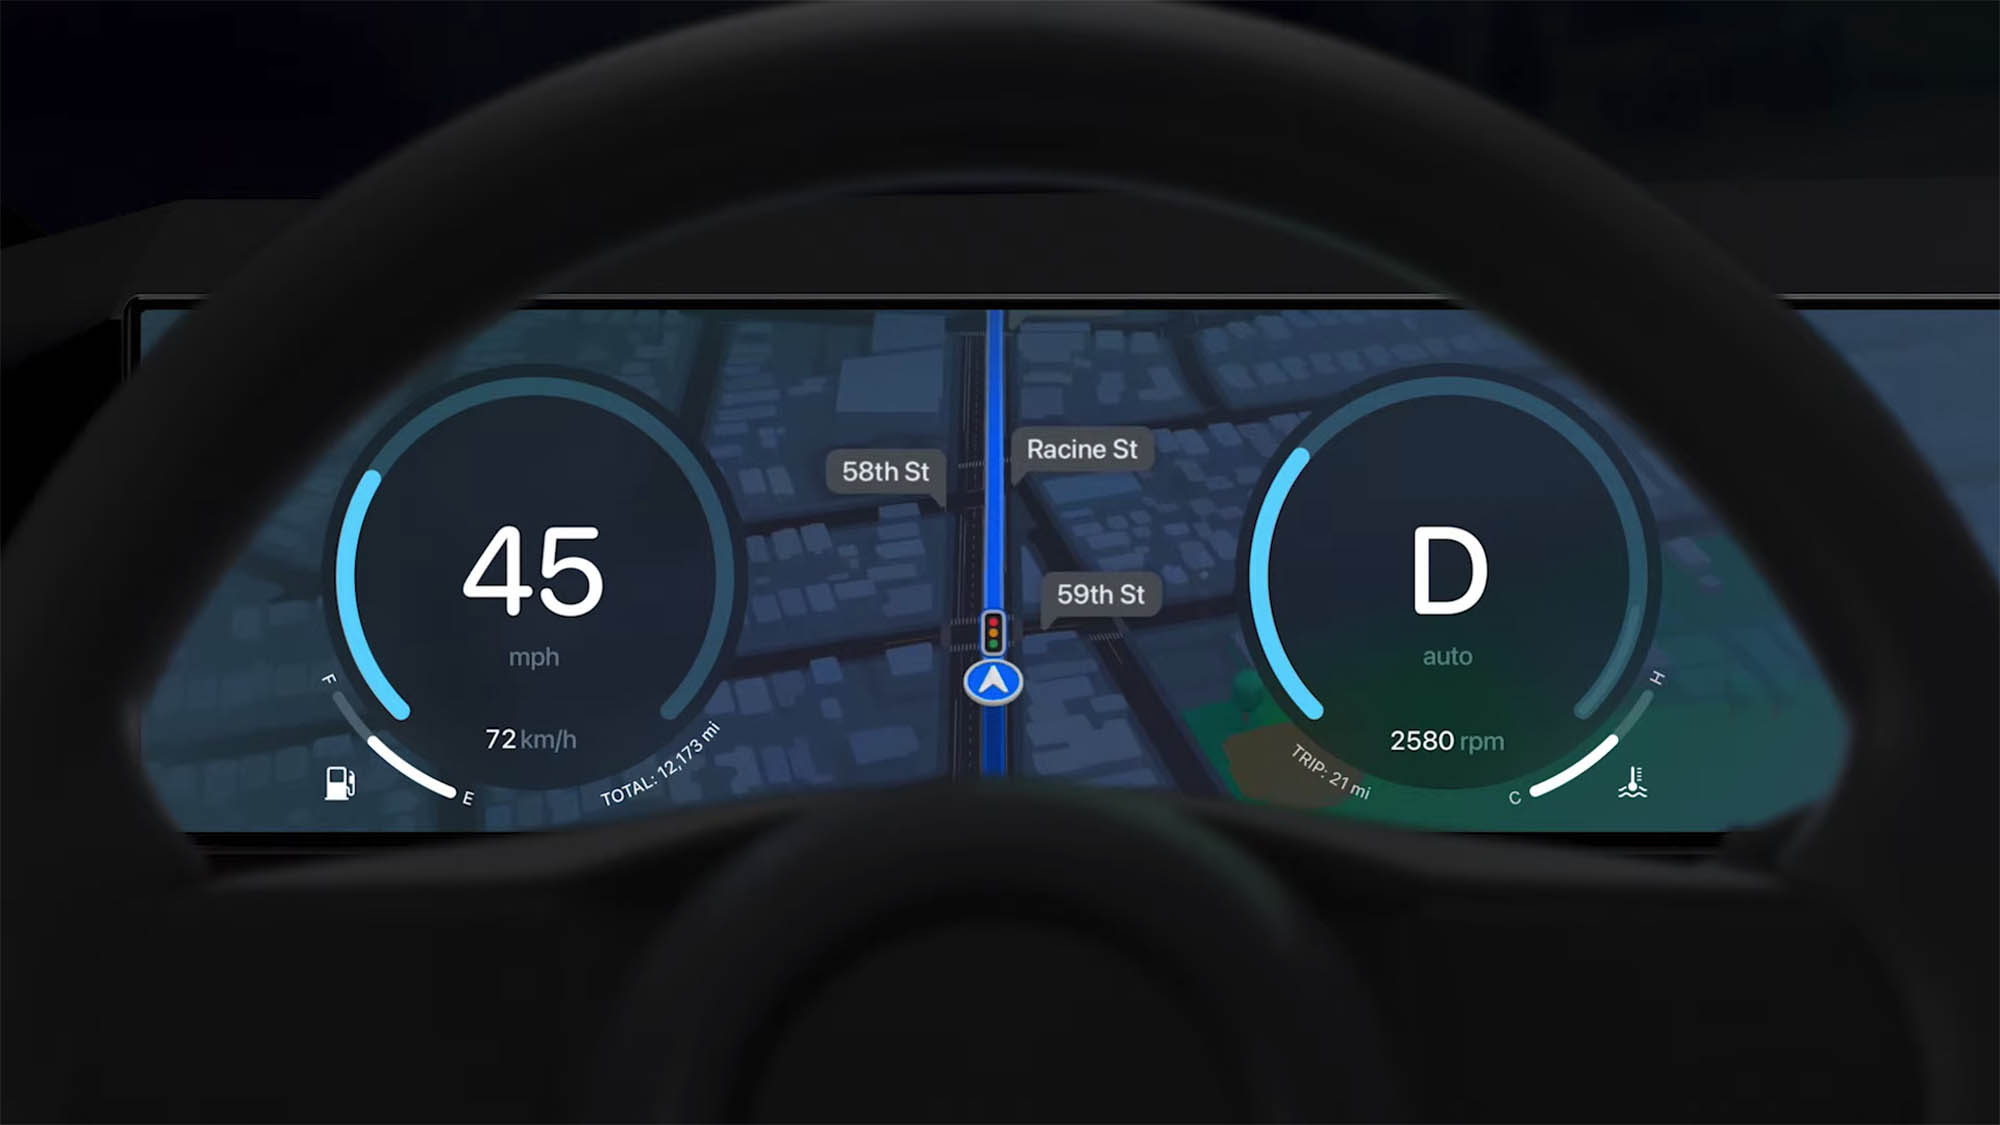 Next-generation Apple CarPlay interface.